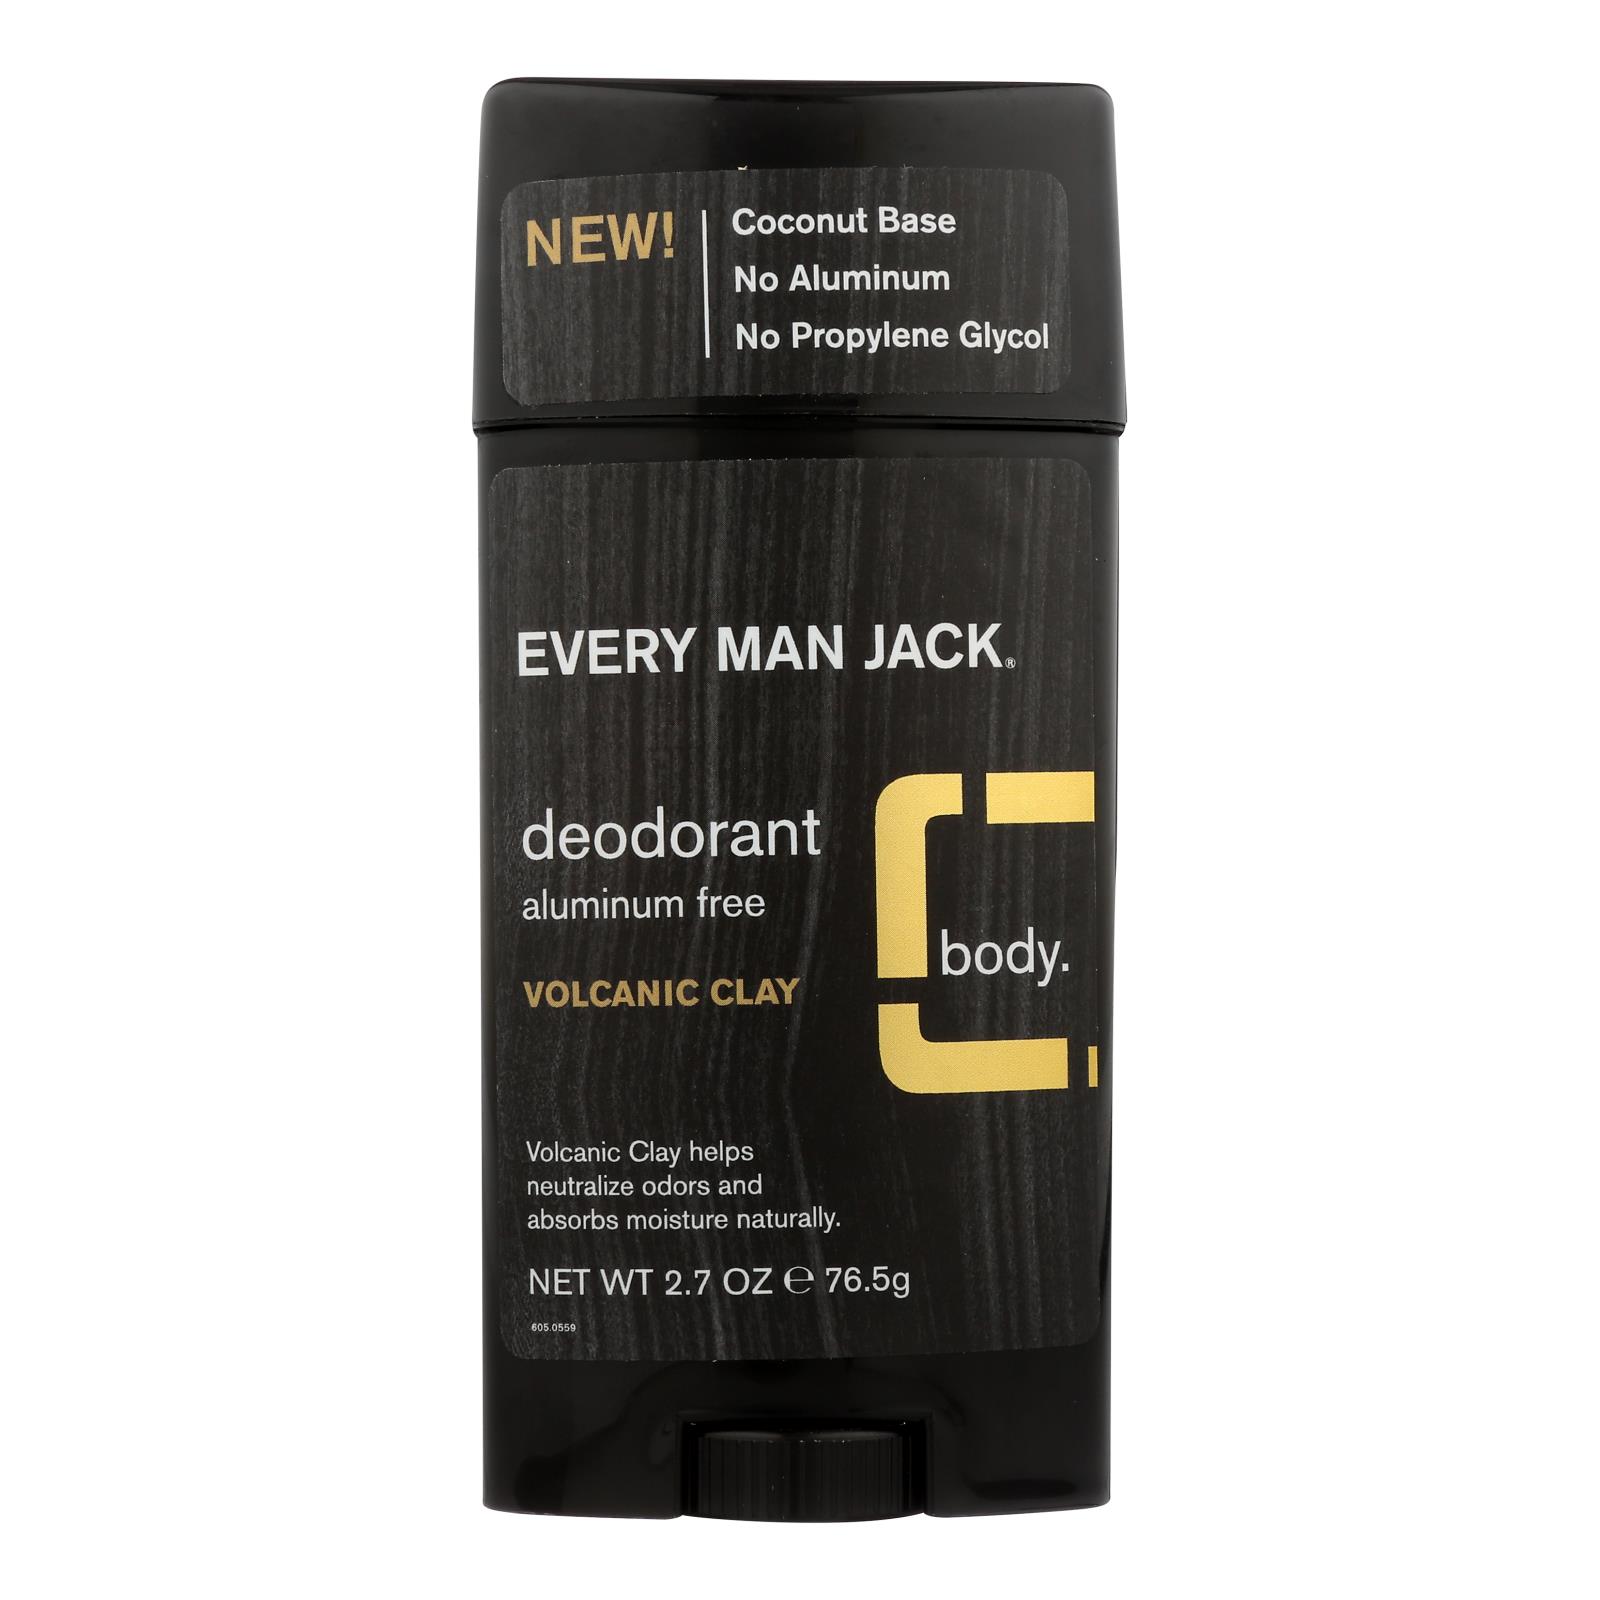 Every Man Jack - Deodorant Volcanic Clay - 1 Each - 2.7 OZ